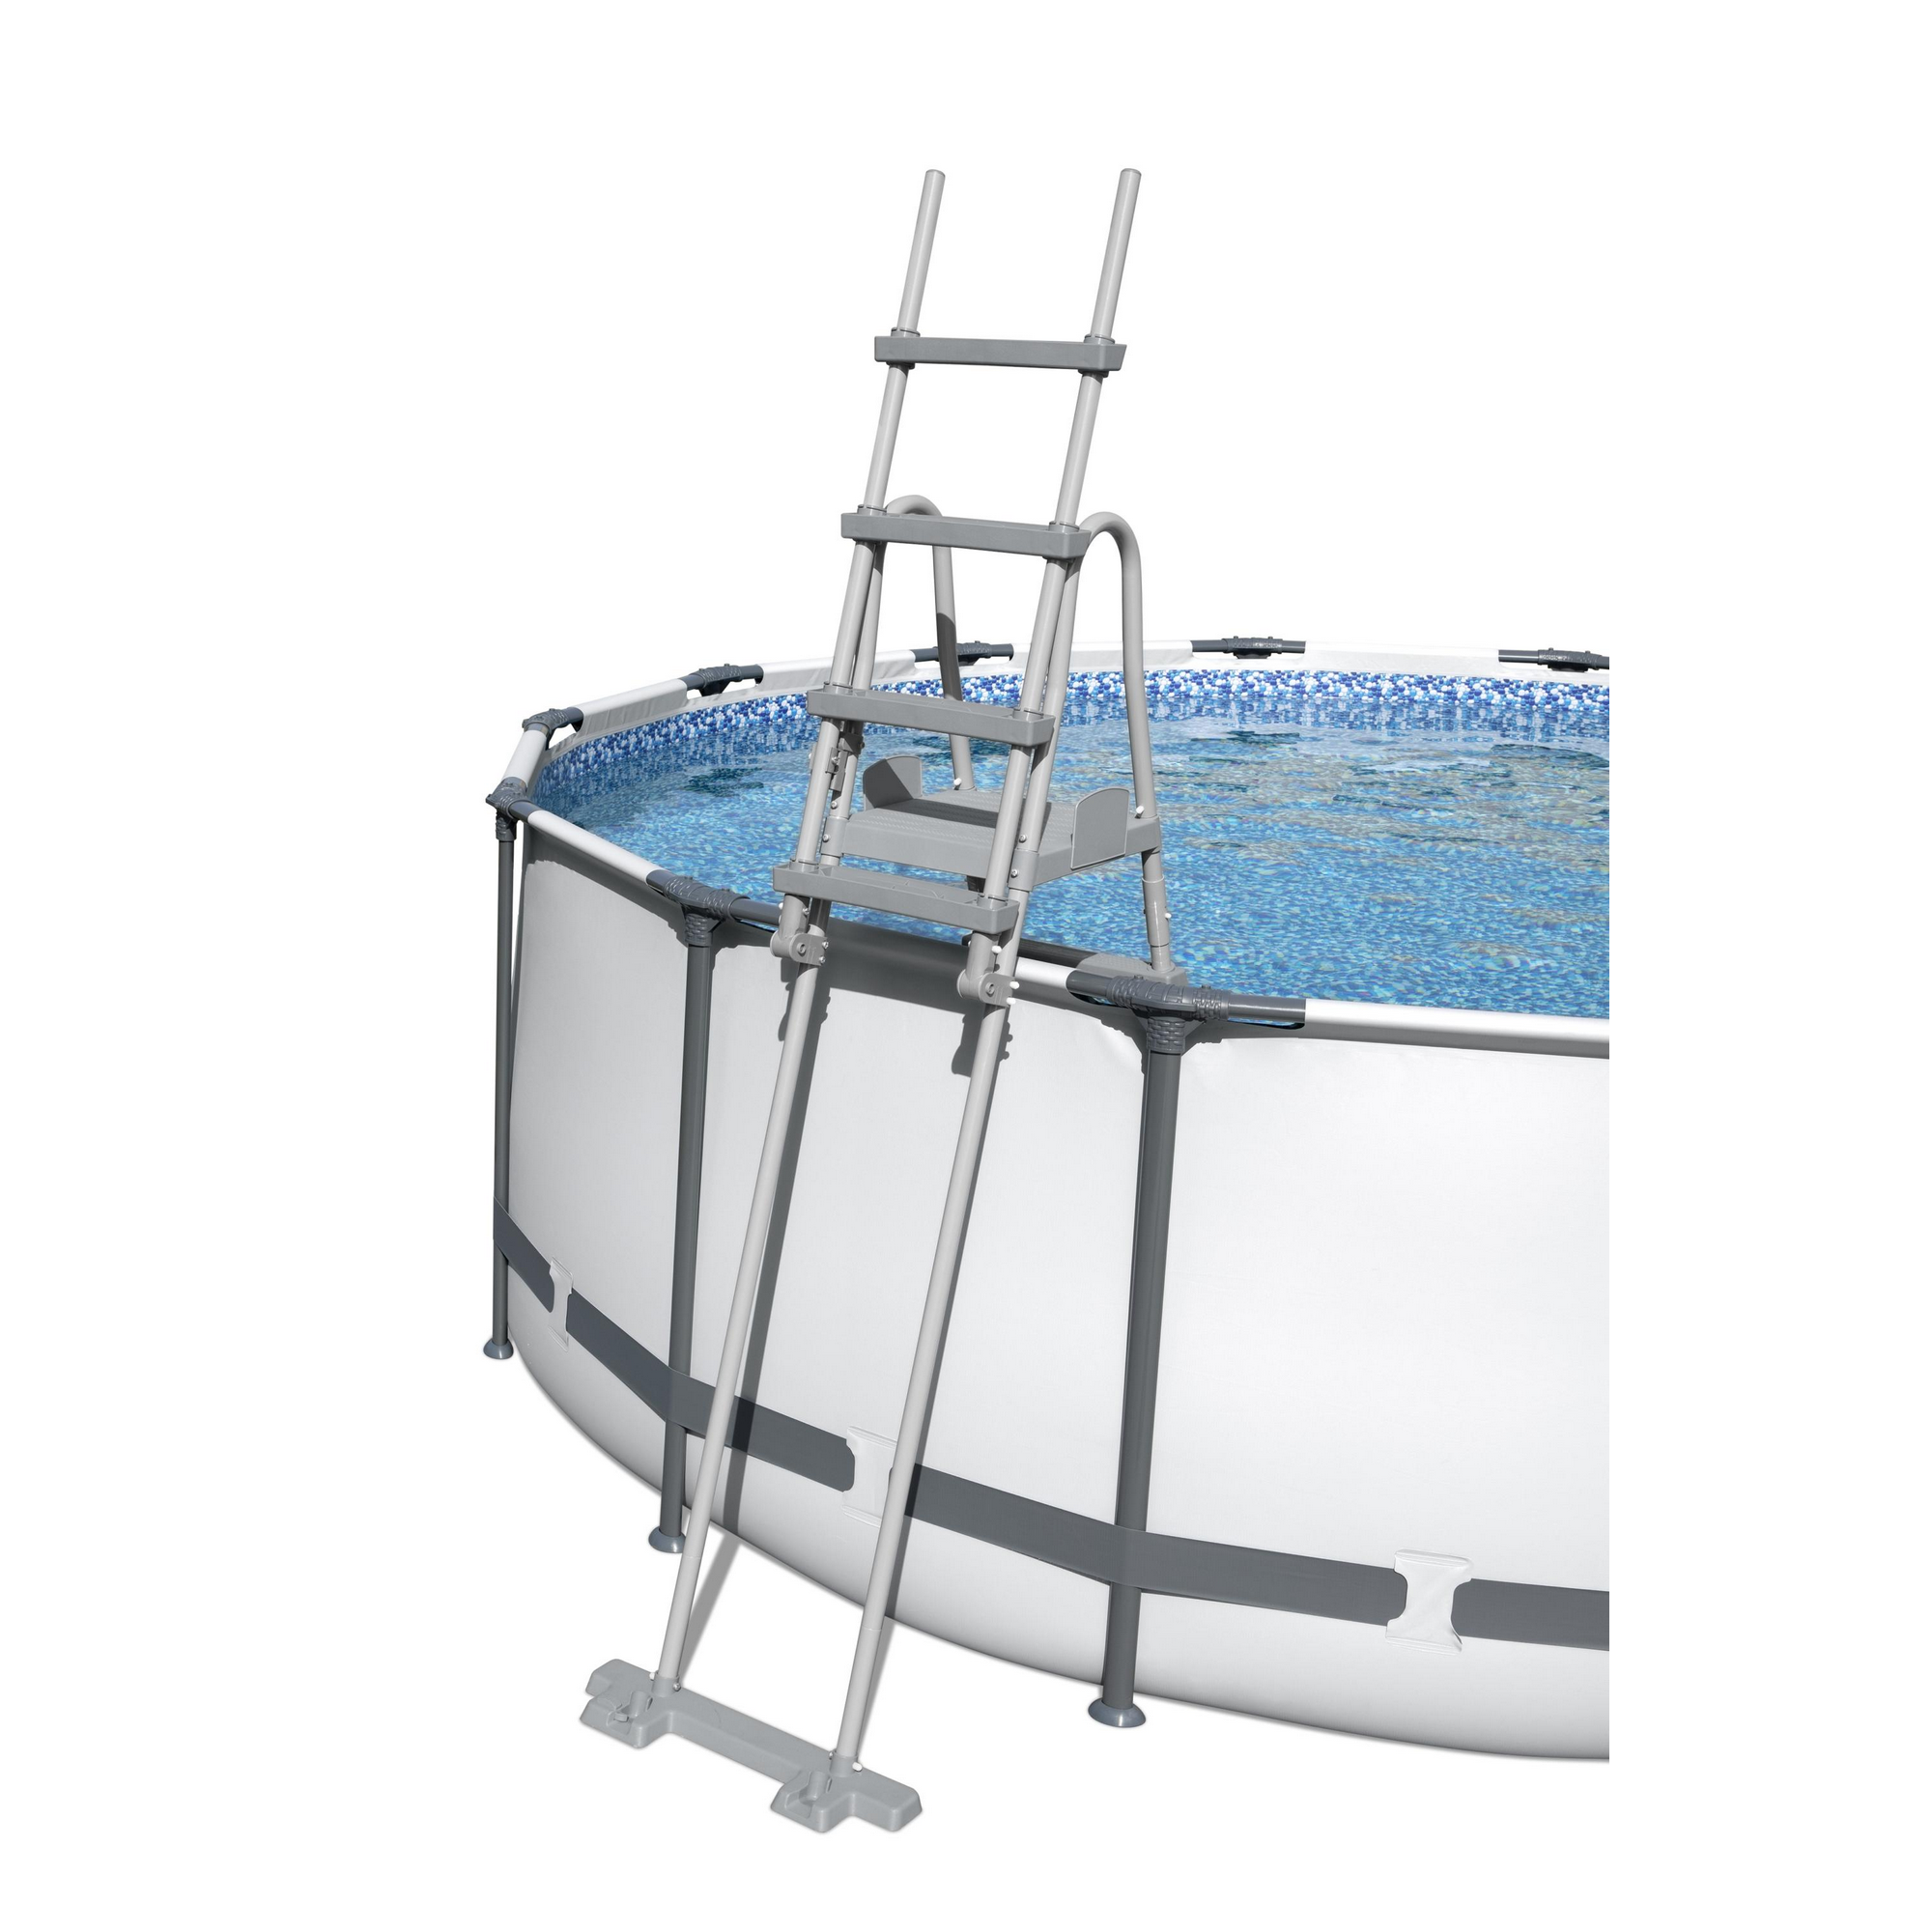 Pool-Übersteigleiter 'Flowclear' 4-Stufig, 132 cm + product picture